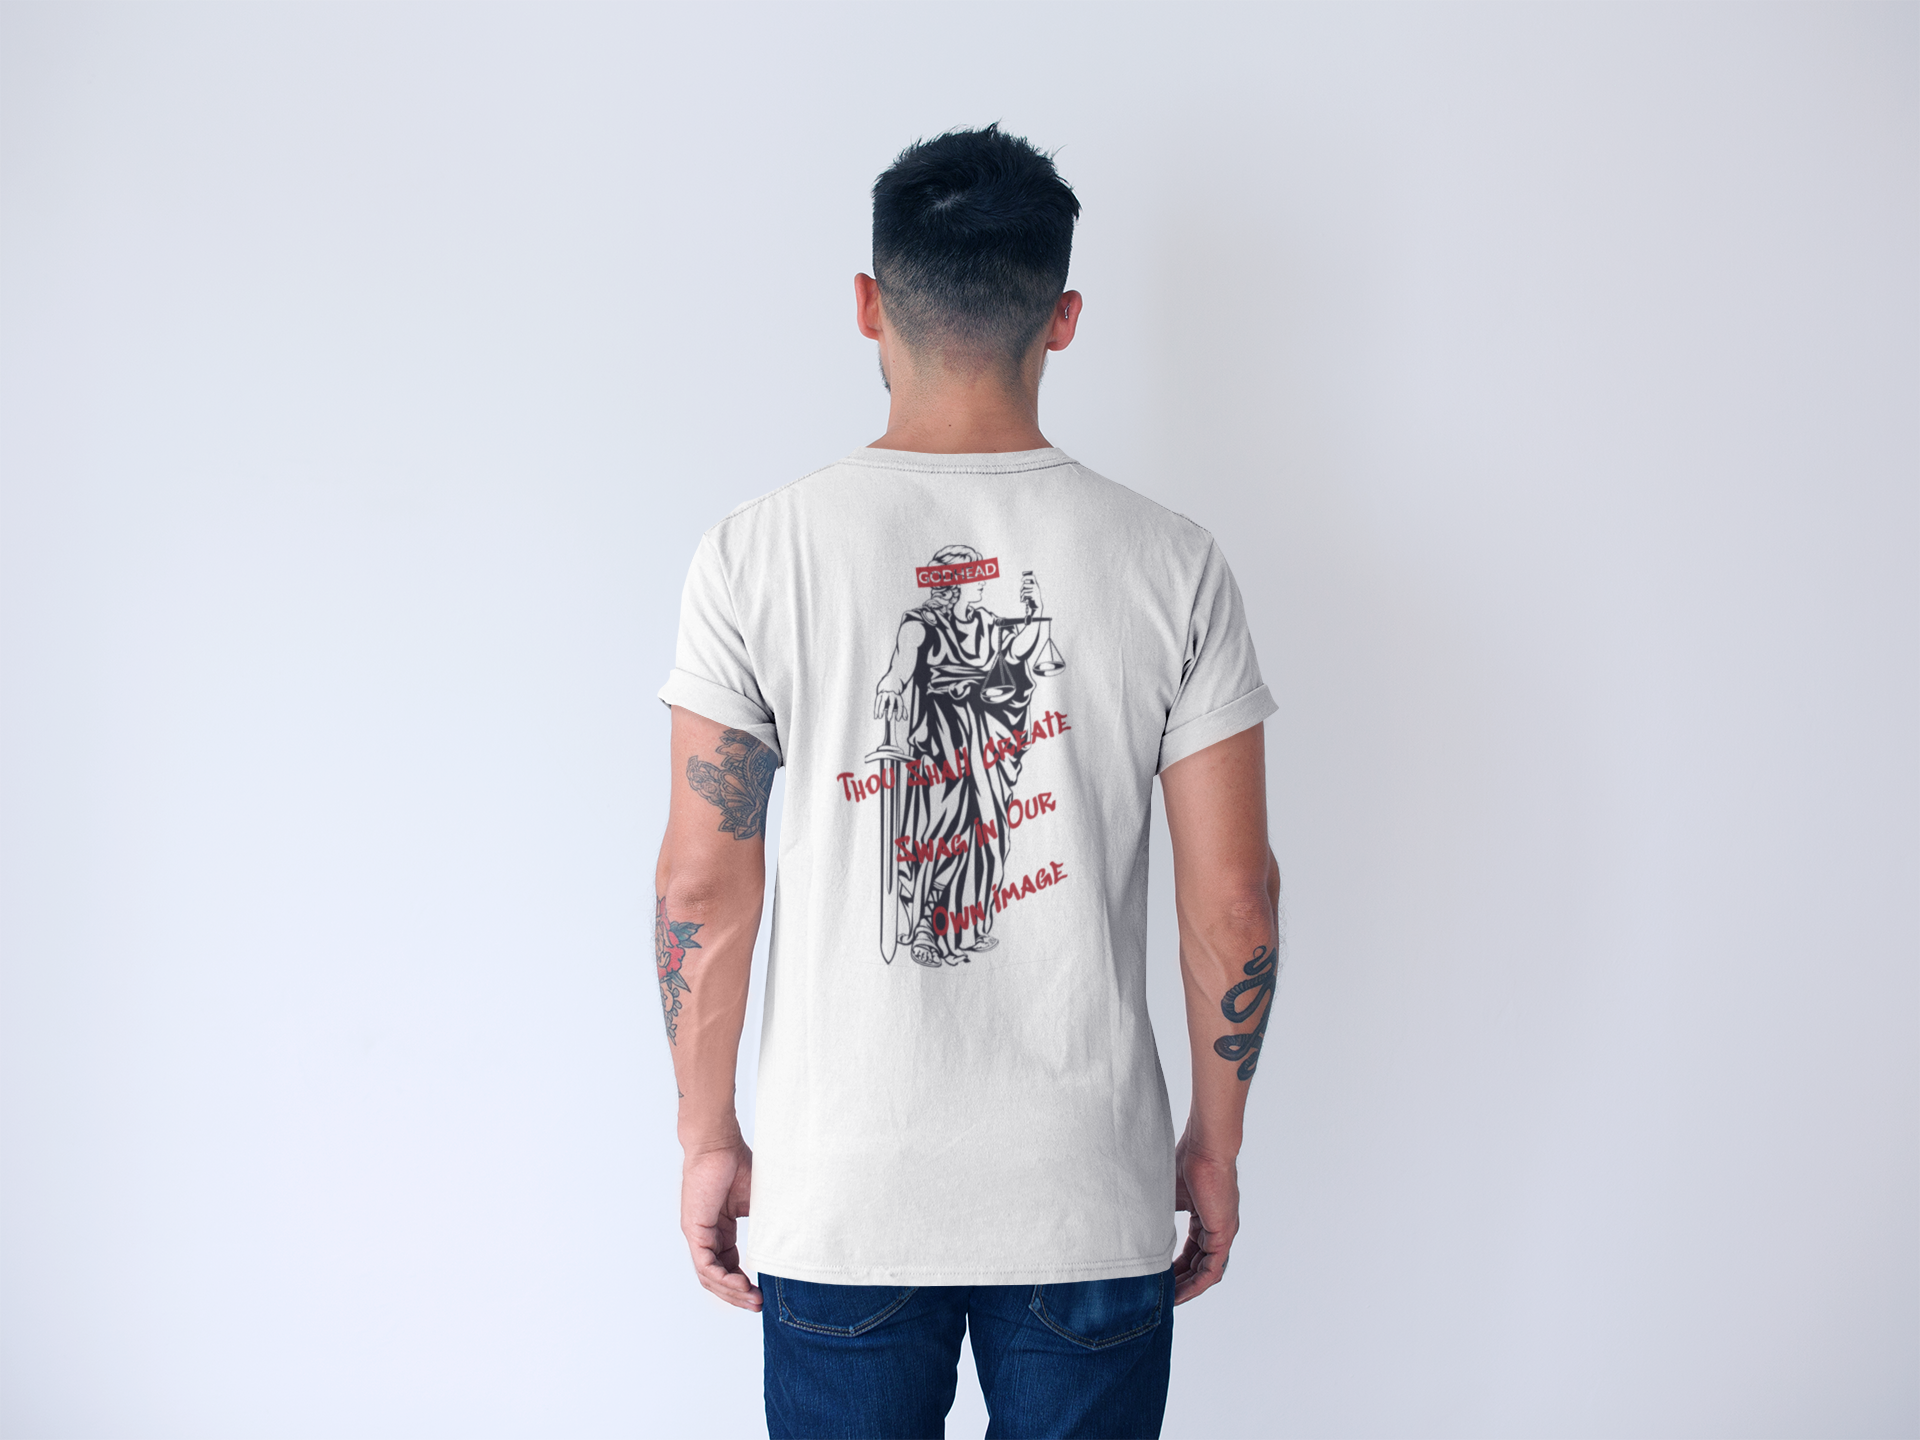 GODHEAD [Vandalized Justice] T-Shirt